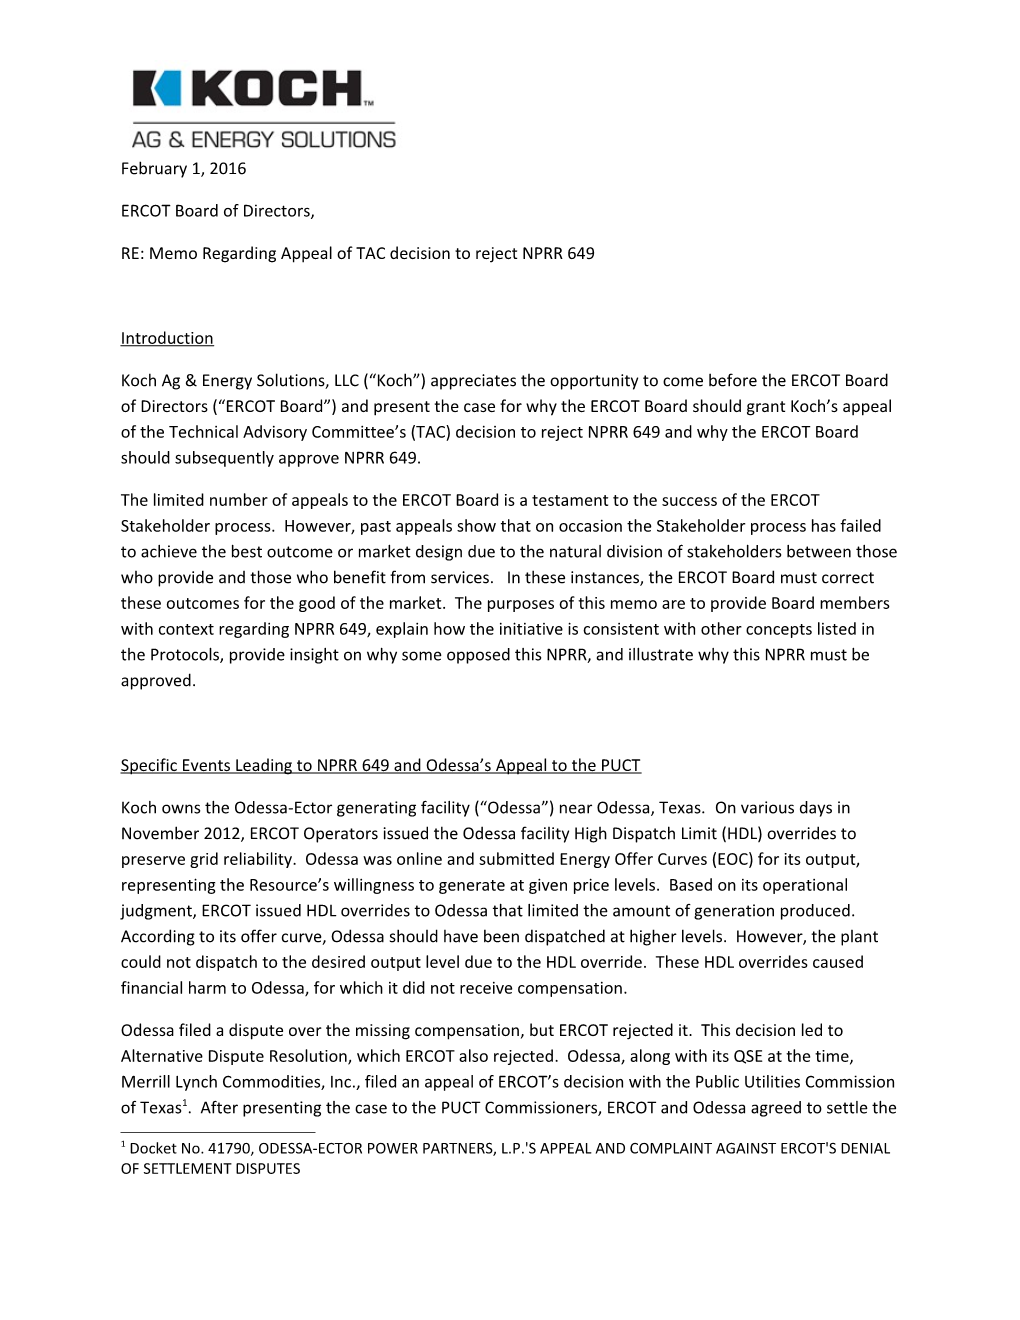 RE: Memo Regarding Appeal of TAC Decision to Reject NPRR 649